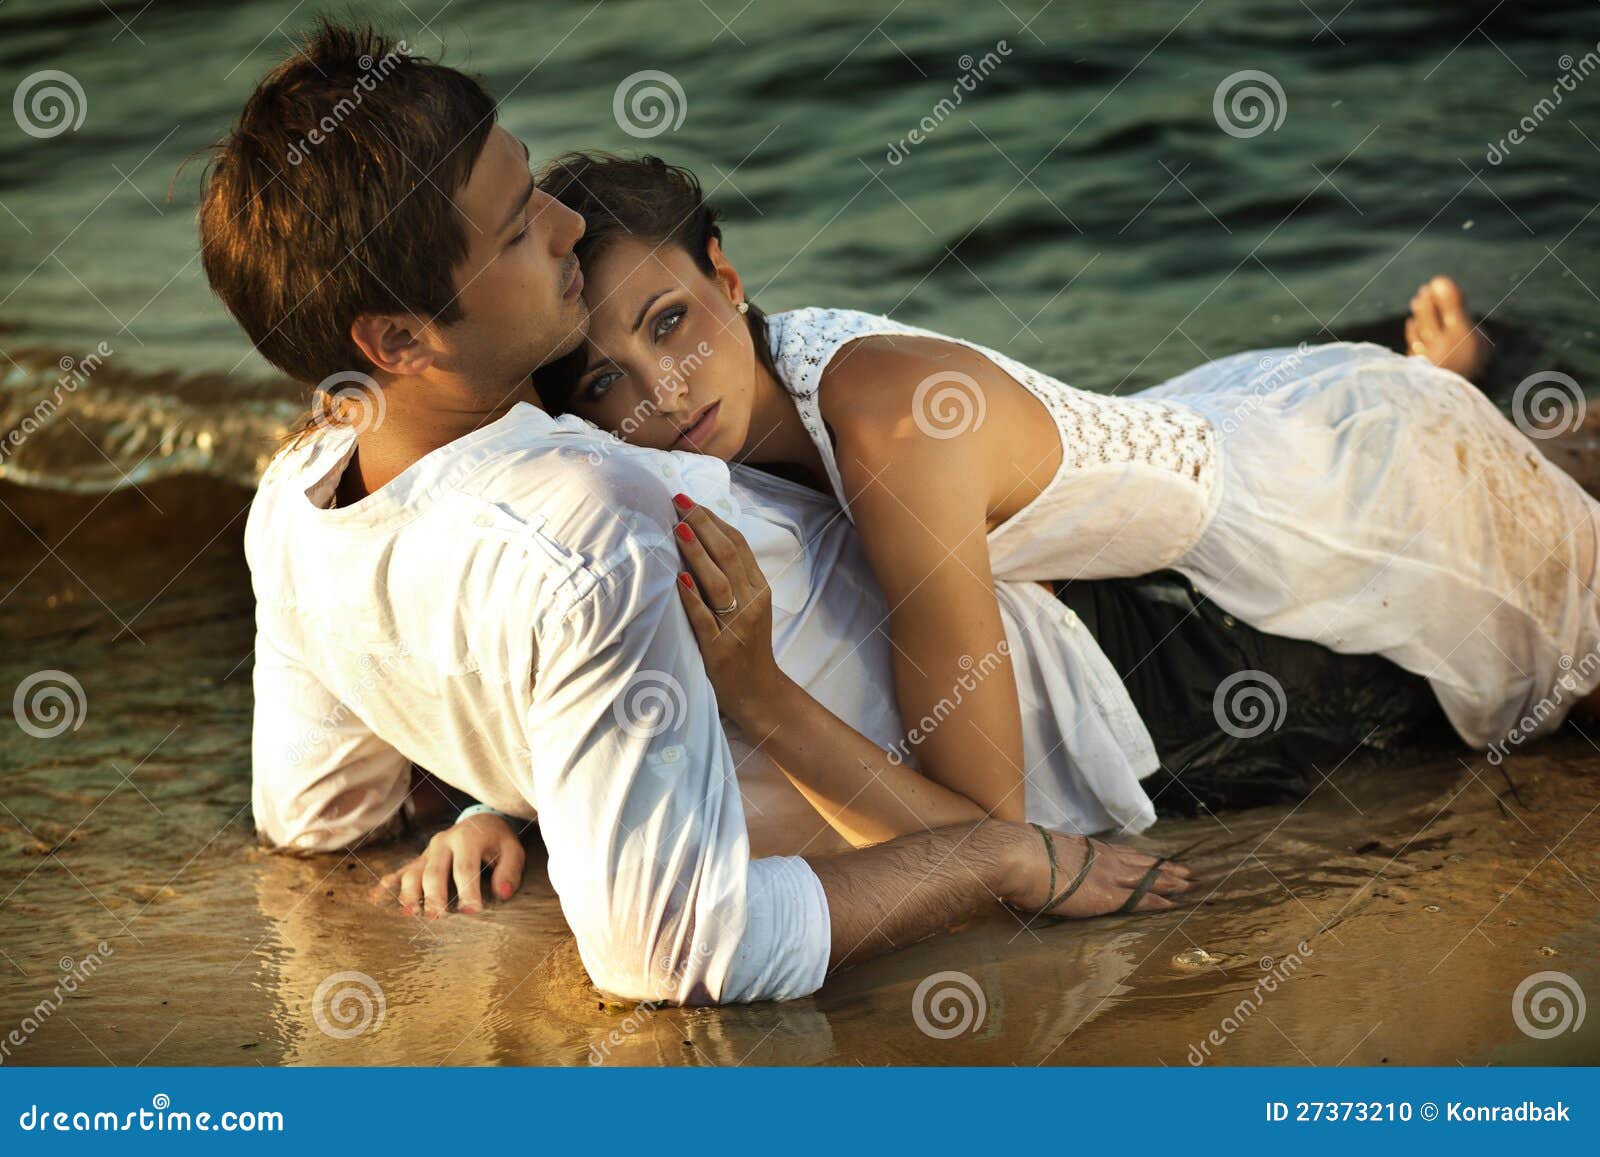 intimacy on the beach